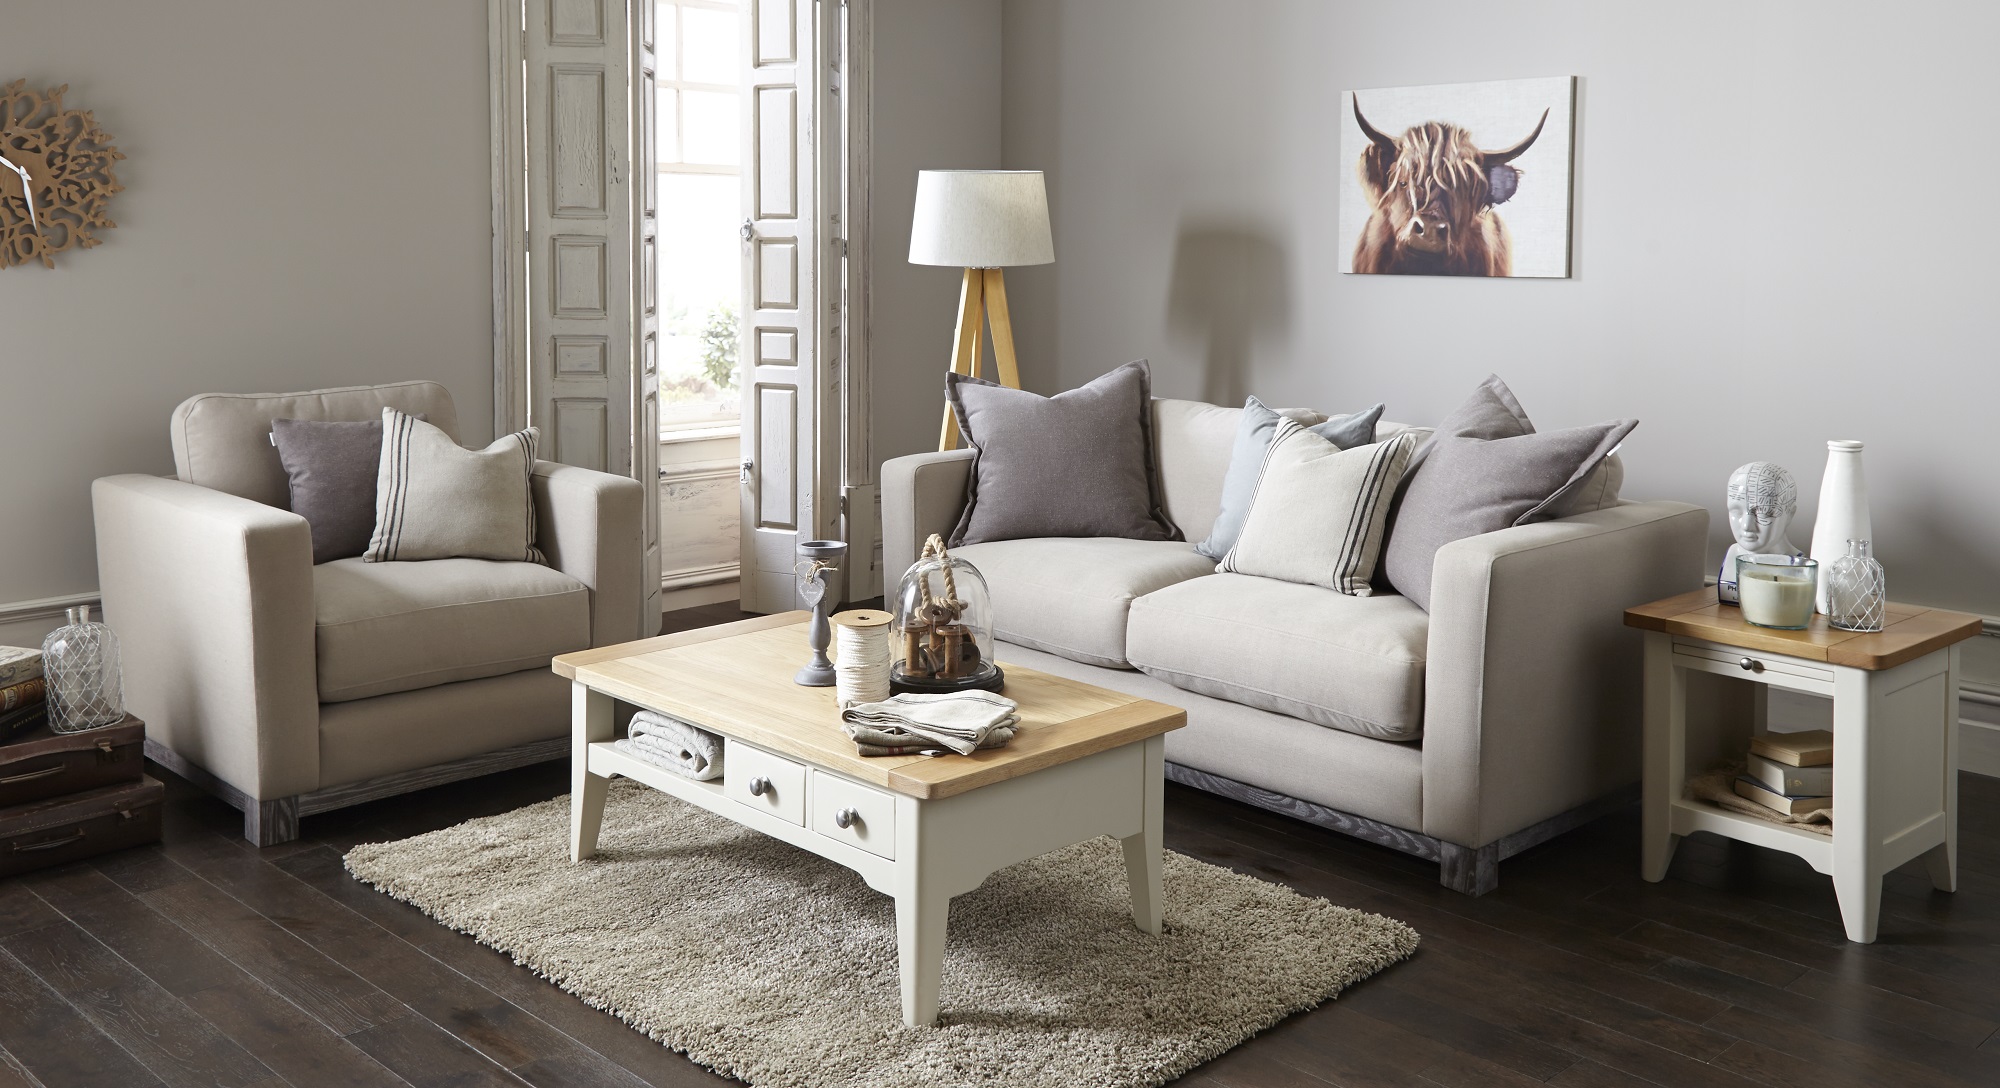 john lewis oak living room furniture